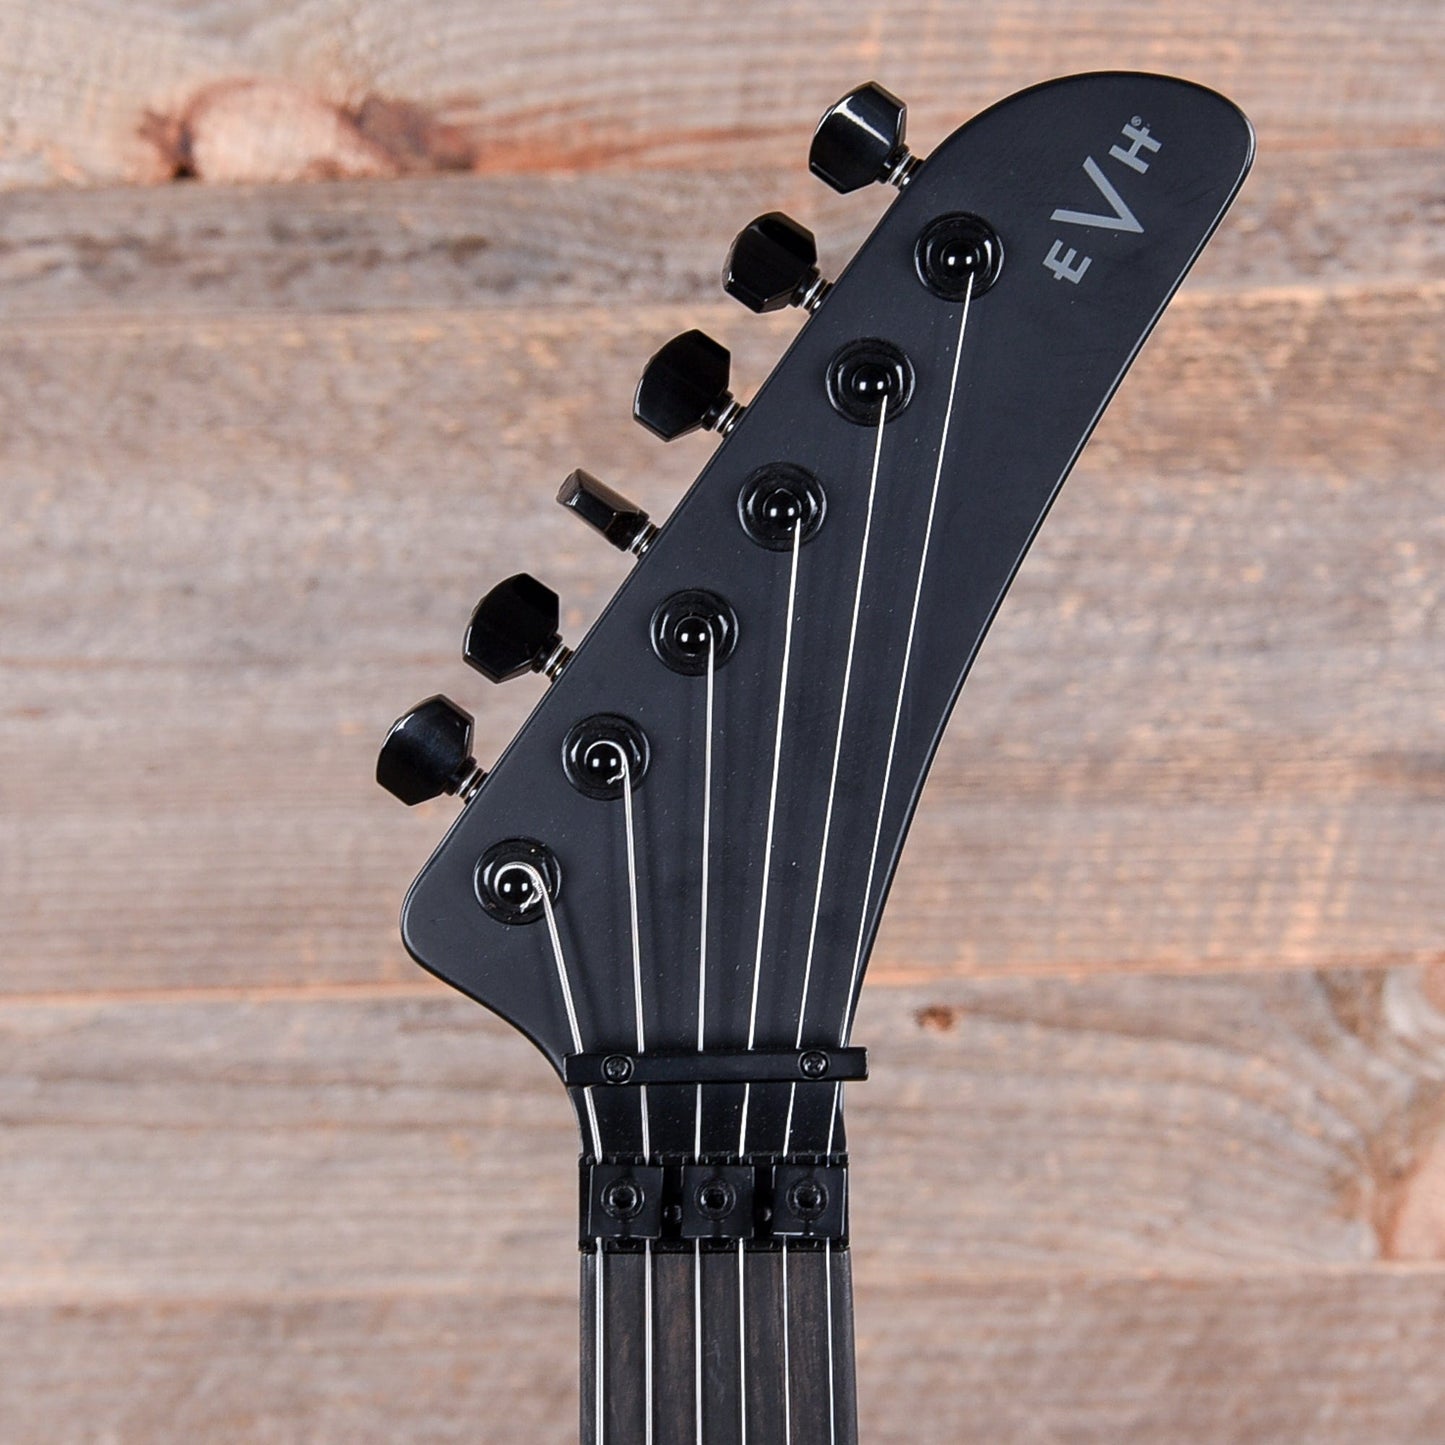 EVH 5150 Series Standard Stealth Black Electric Guitars / Solid Body